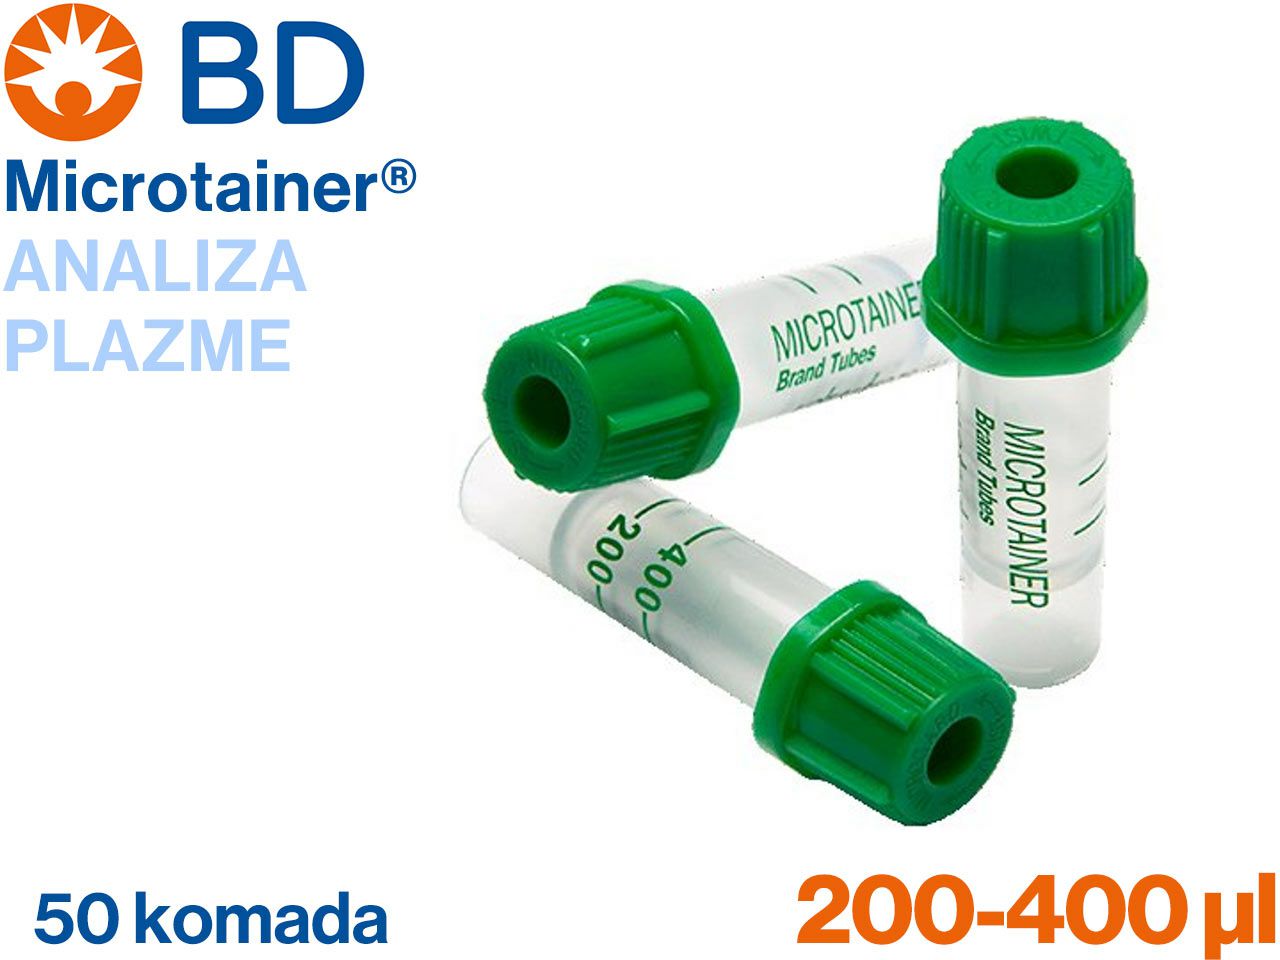 MICROTAINER 200-400 µl, 50 komada